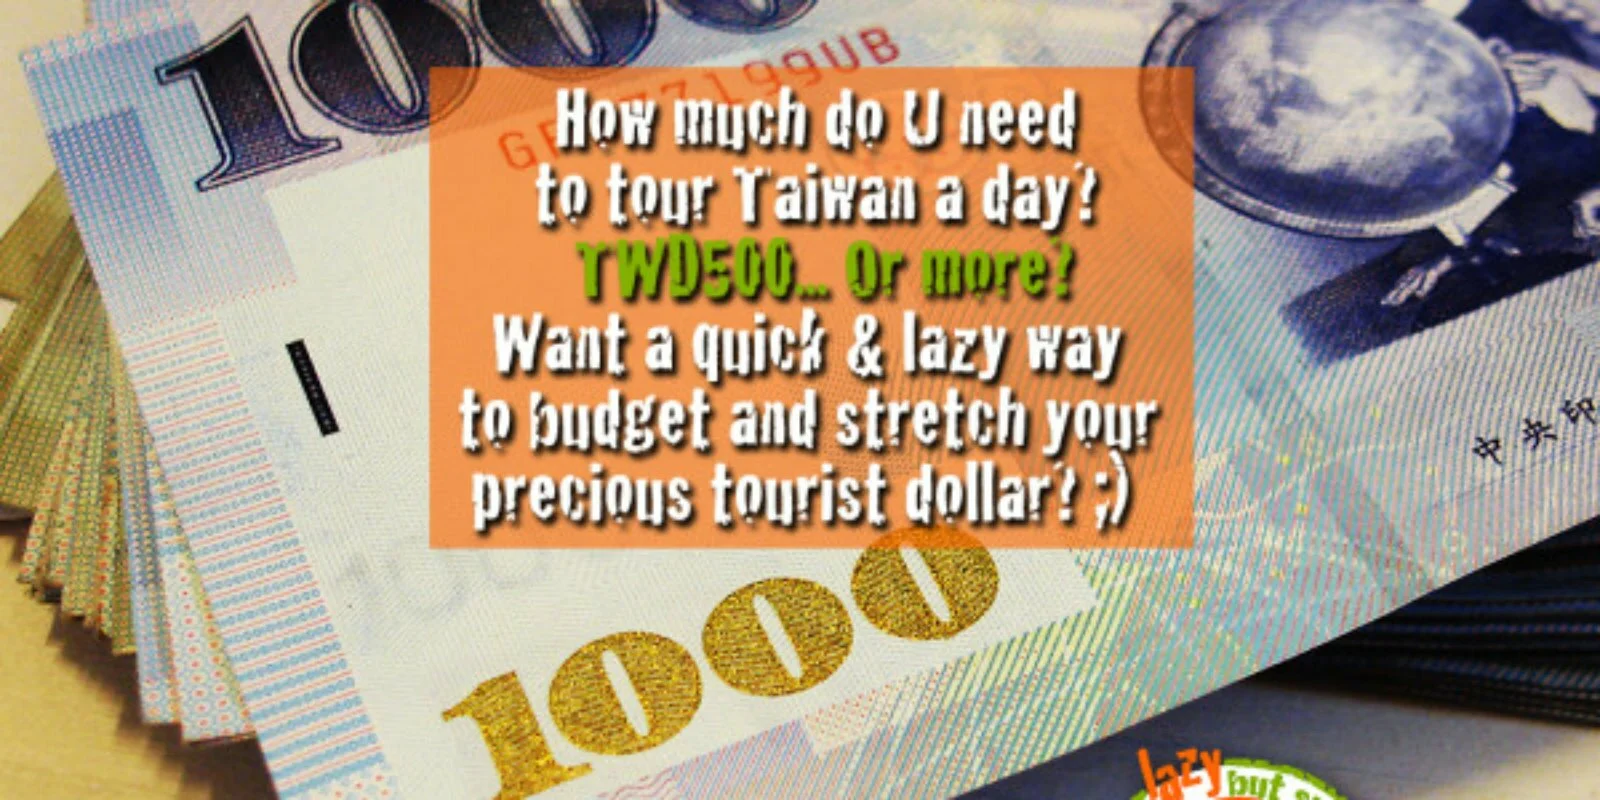 Taiwan-Dollar-For-1-Day-Tour